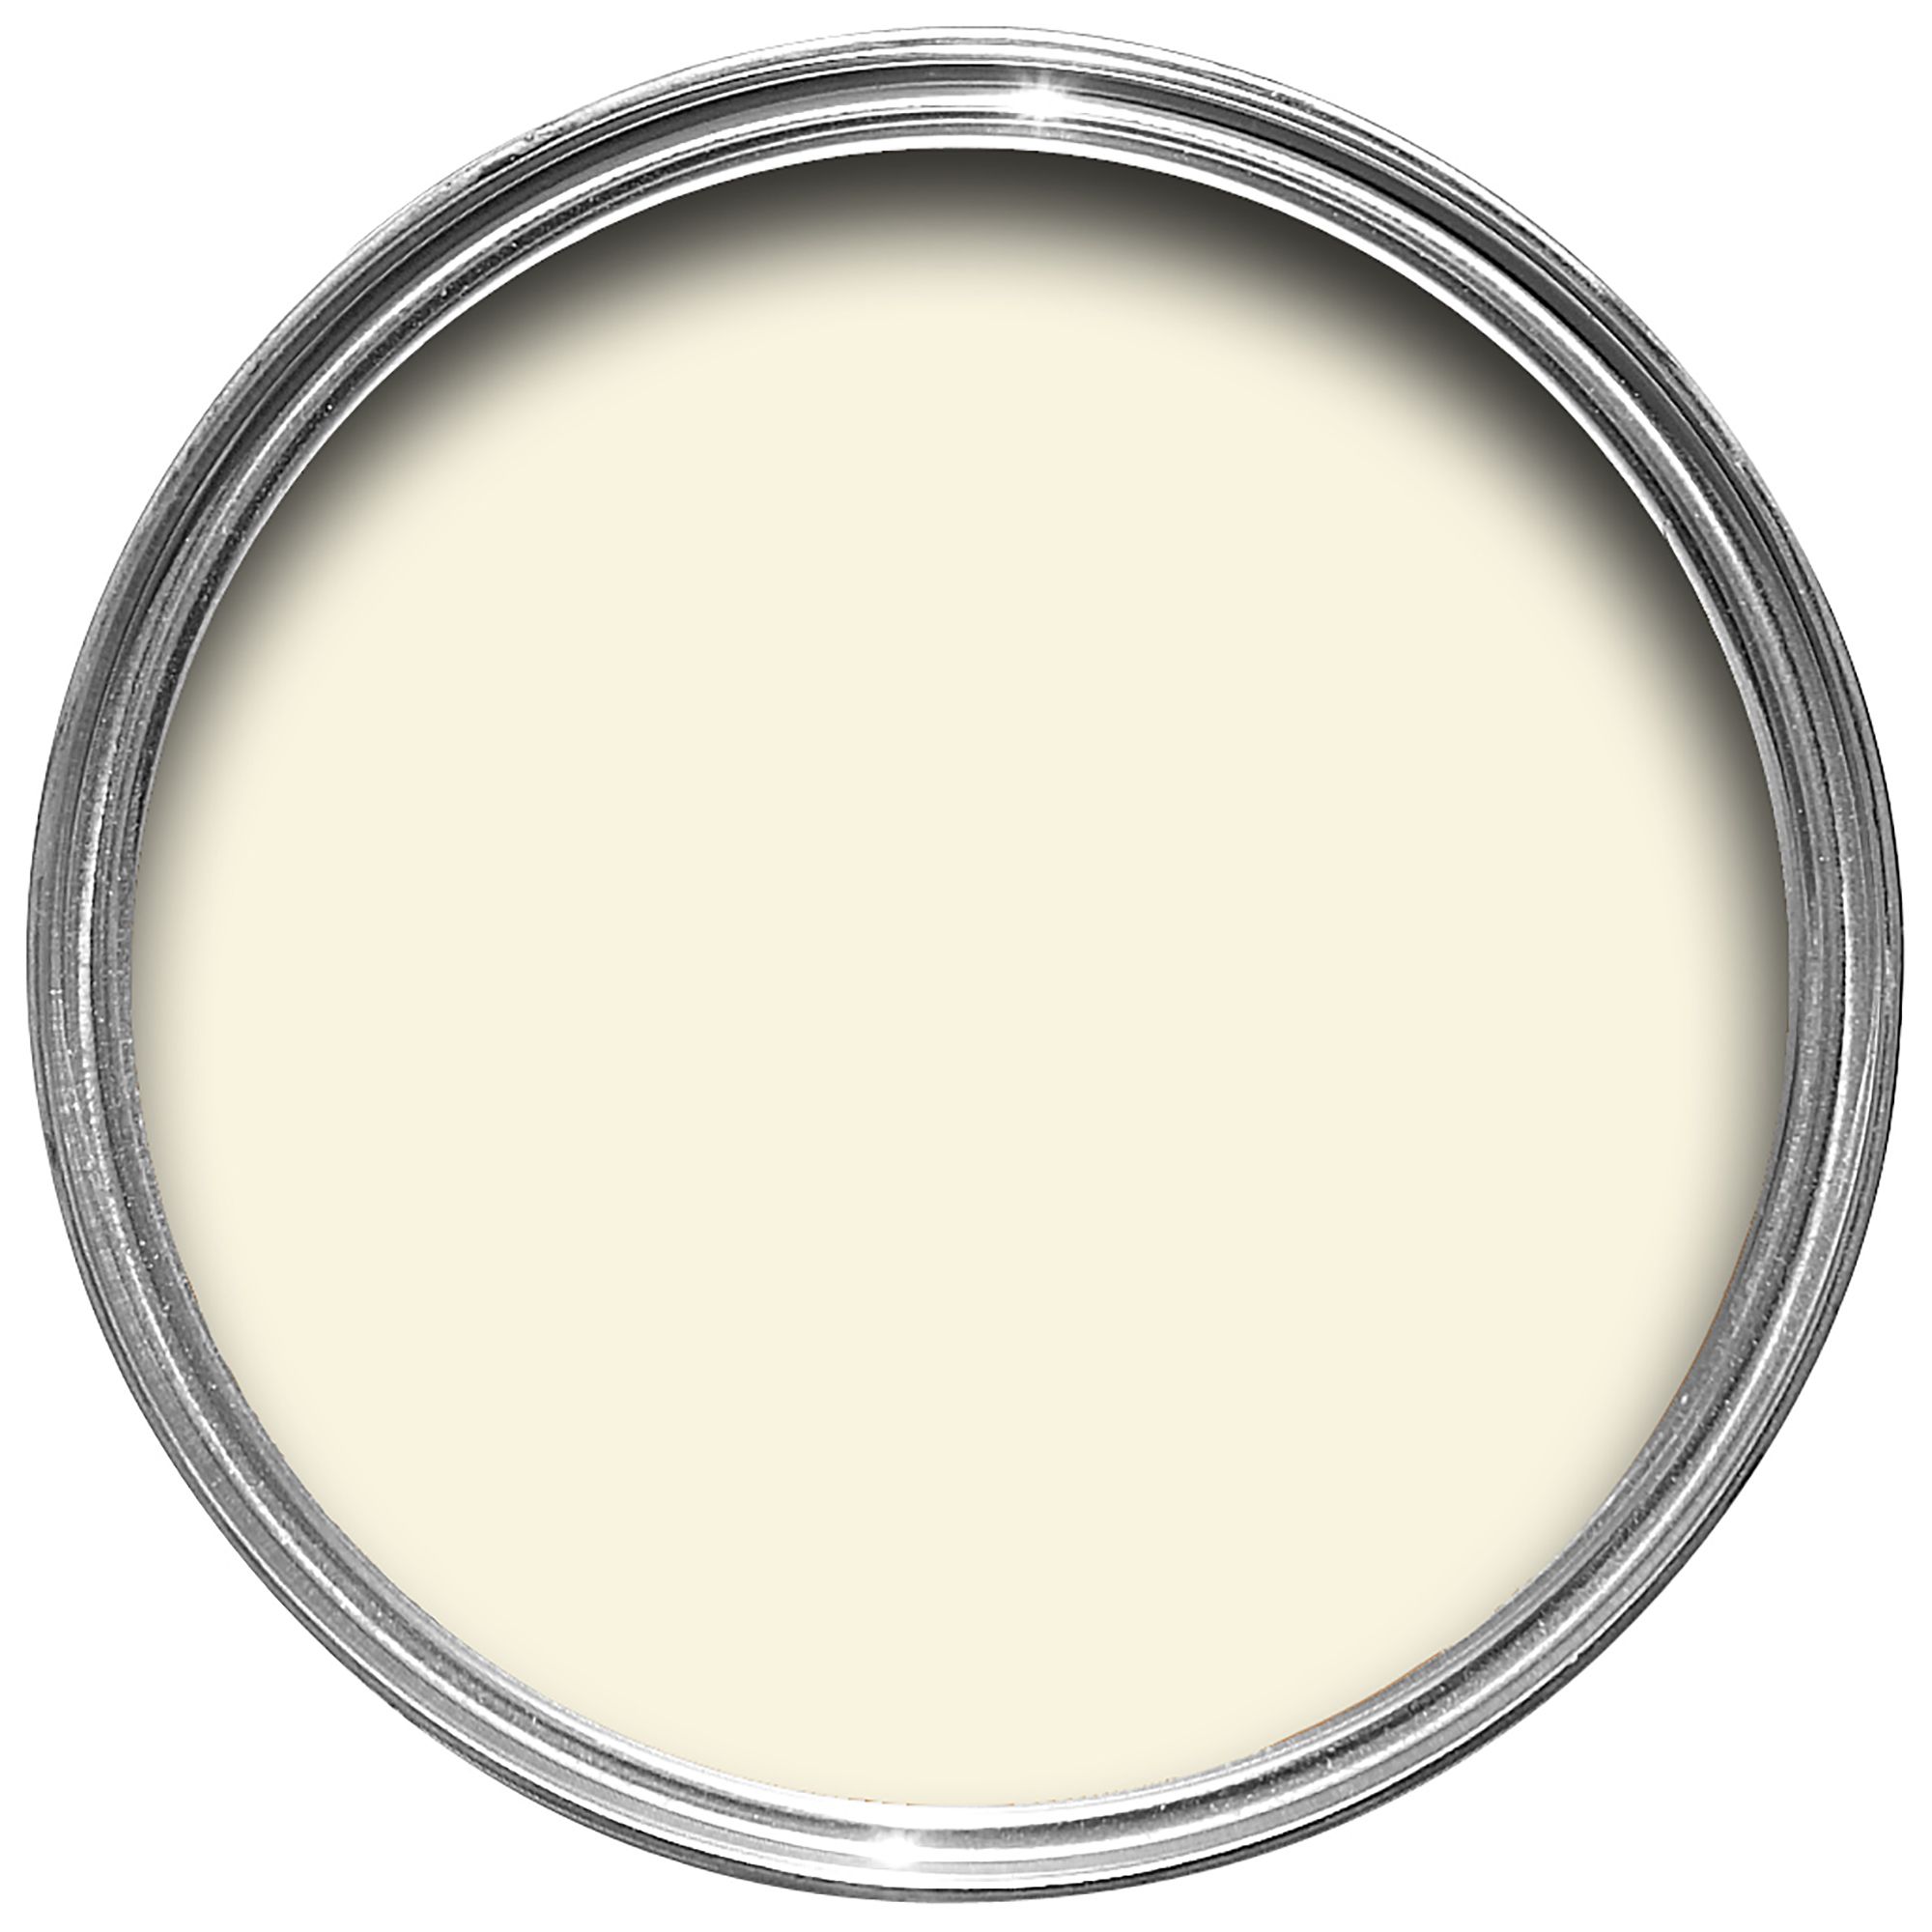 Crown Breatheasy Soft linen Mid sheen Emulsion paint, 2.5L